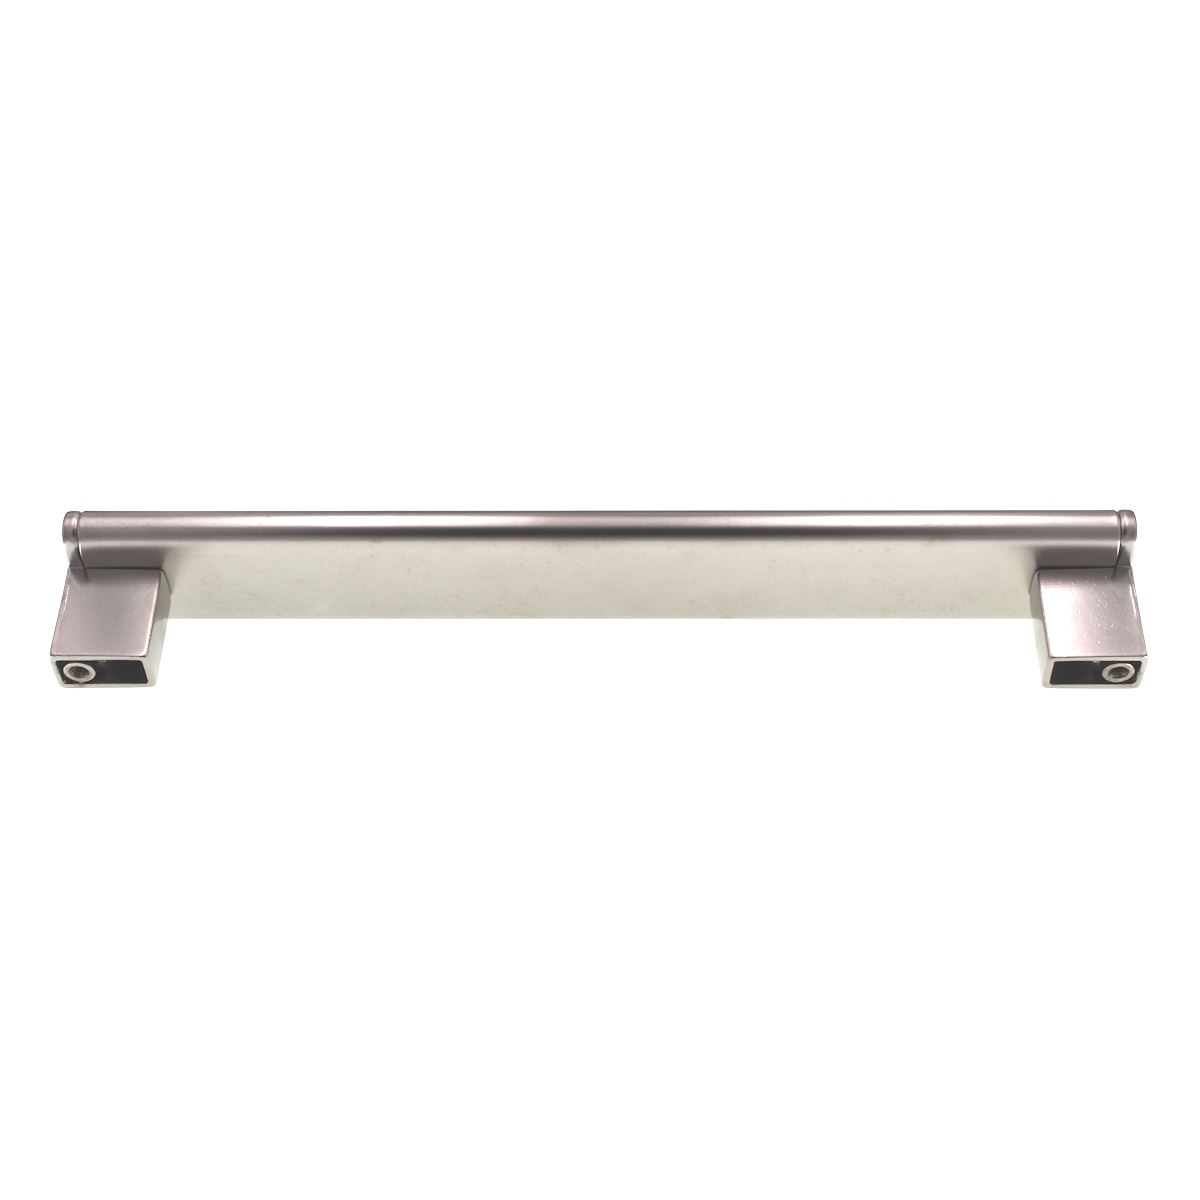 Schaub Tenor Cabinet Bar Pull 8 13/16" (224mm) Ctr Satin Nickel 245-224-15